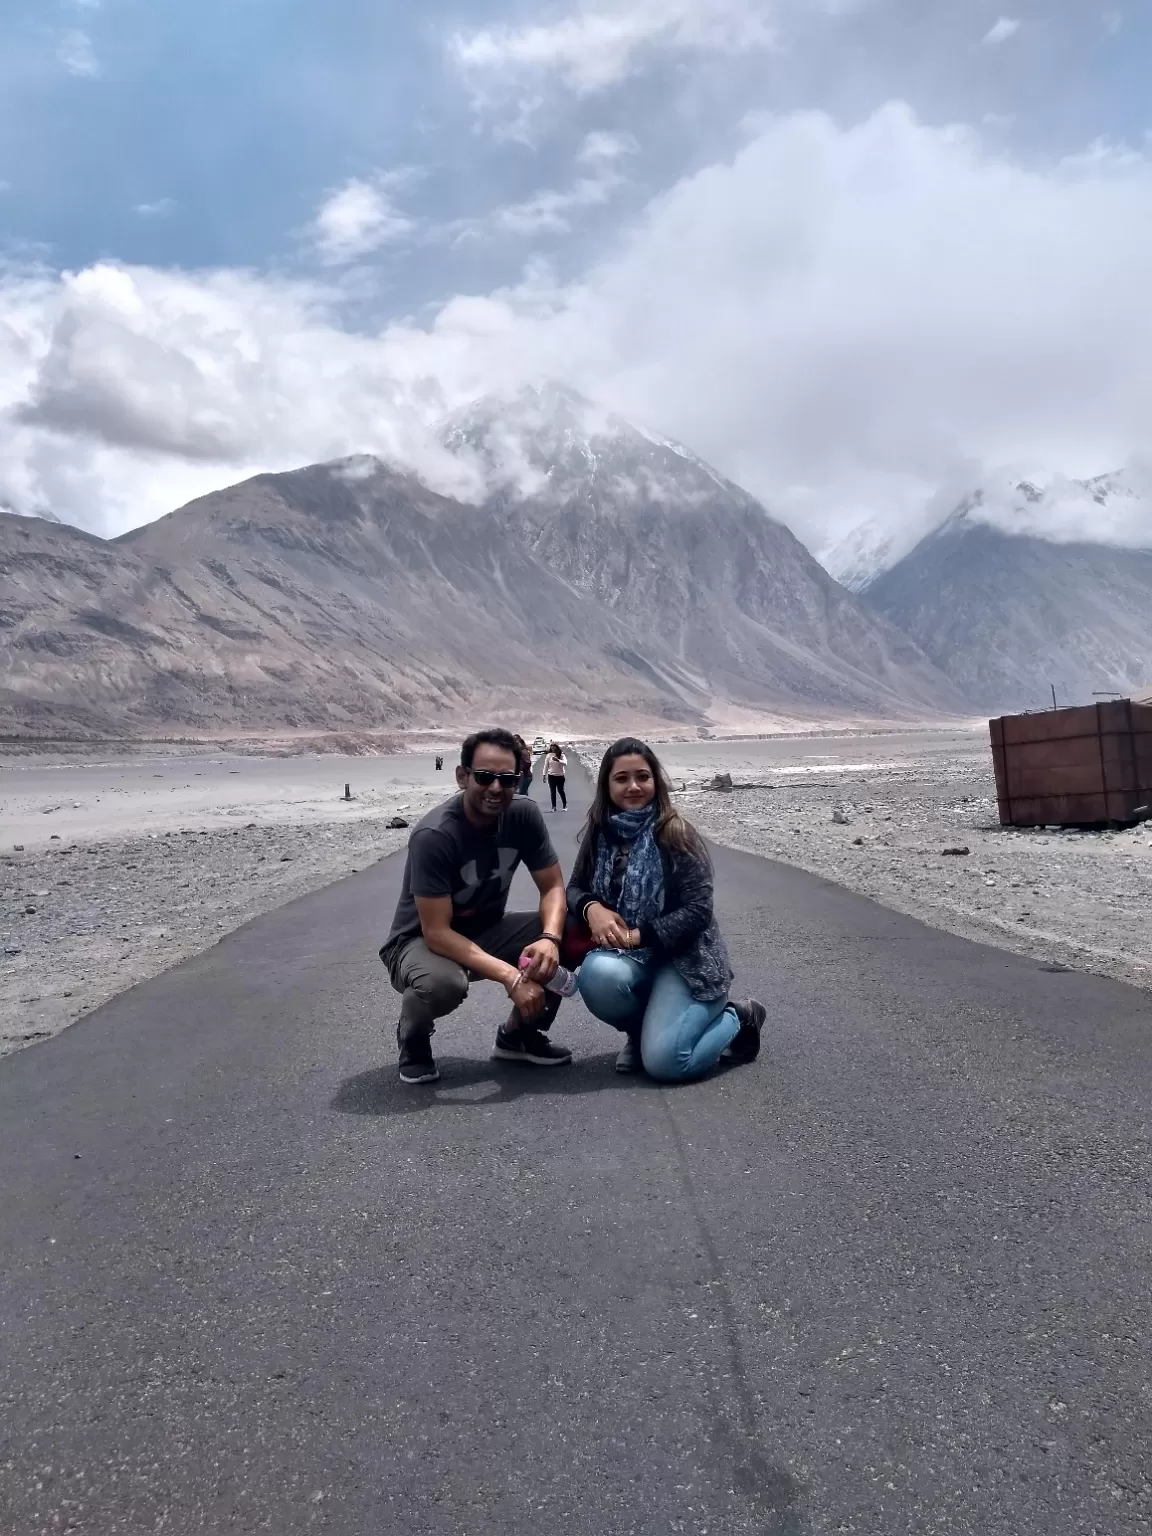 Photo of Ladakh By debatreemjmc